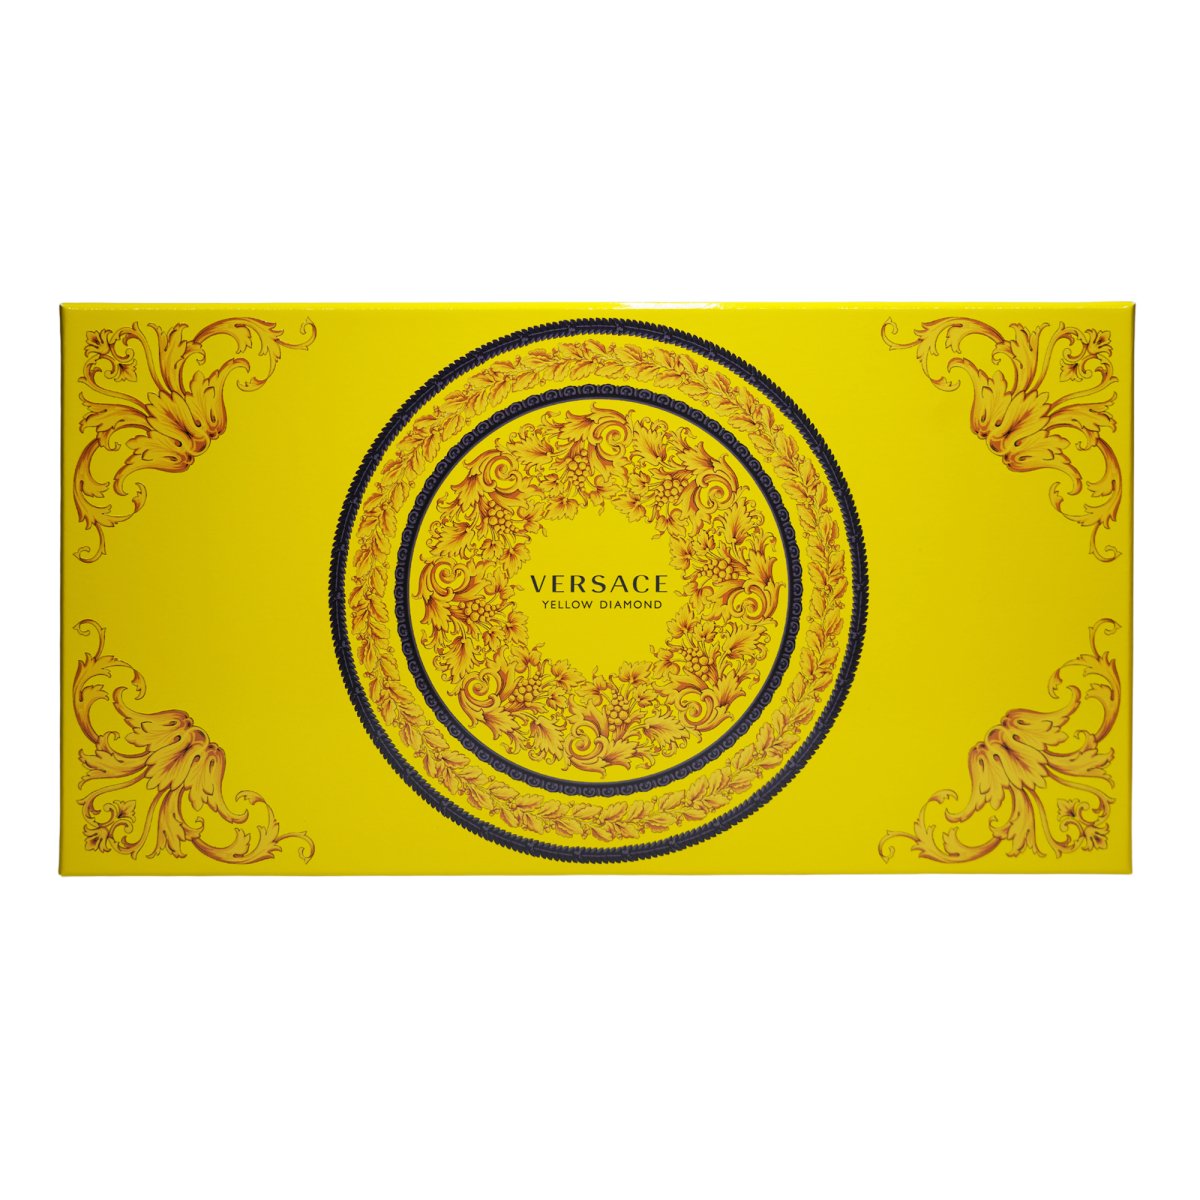 Versace Ladies Yellow Diamond Gift Set Fragrances - Versace - Gift Set